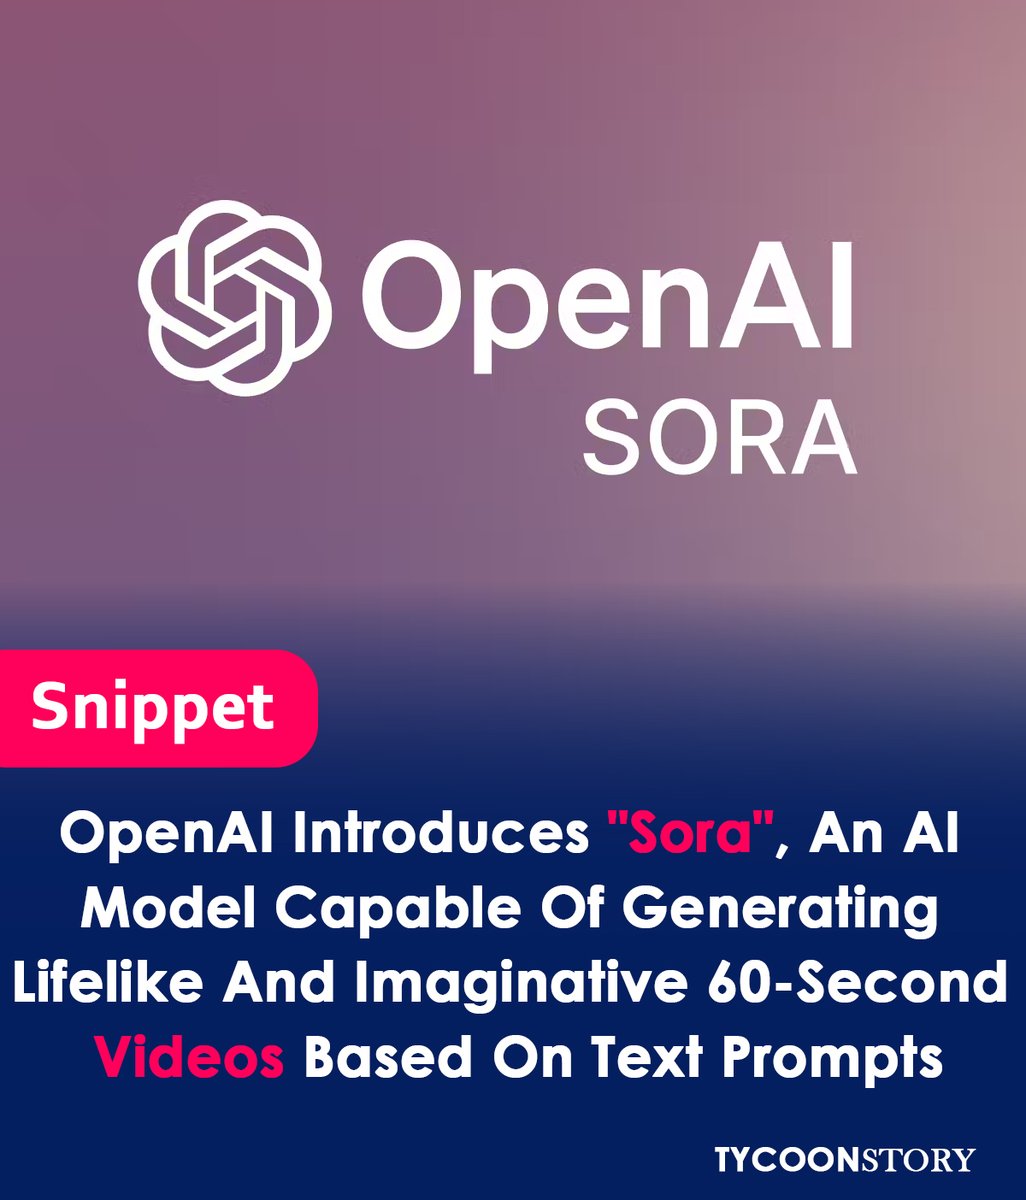 OpenAI unveils Sora, an AI model that revolutionizes video creation, simply describing in text.
#AI #OpenAI #Sora #video #videogeneration #AIvideo #GenerativeAI #creativity #entertainment #digitalmedia #futureofmedia @OpenAI @OpenAIDevs